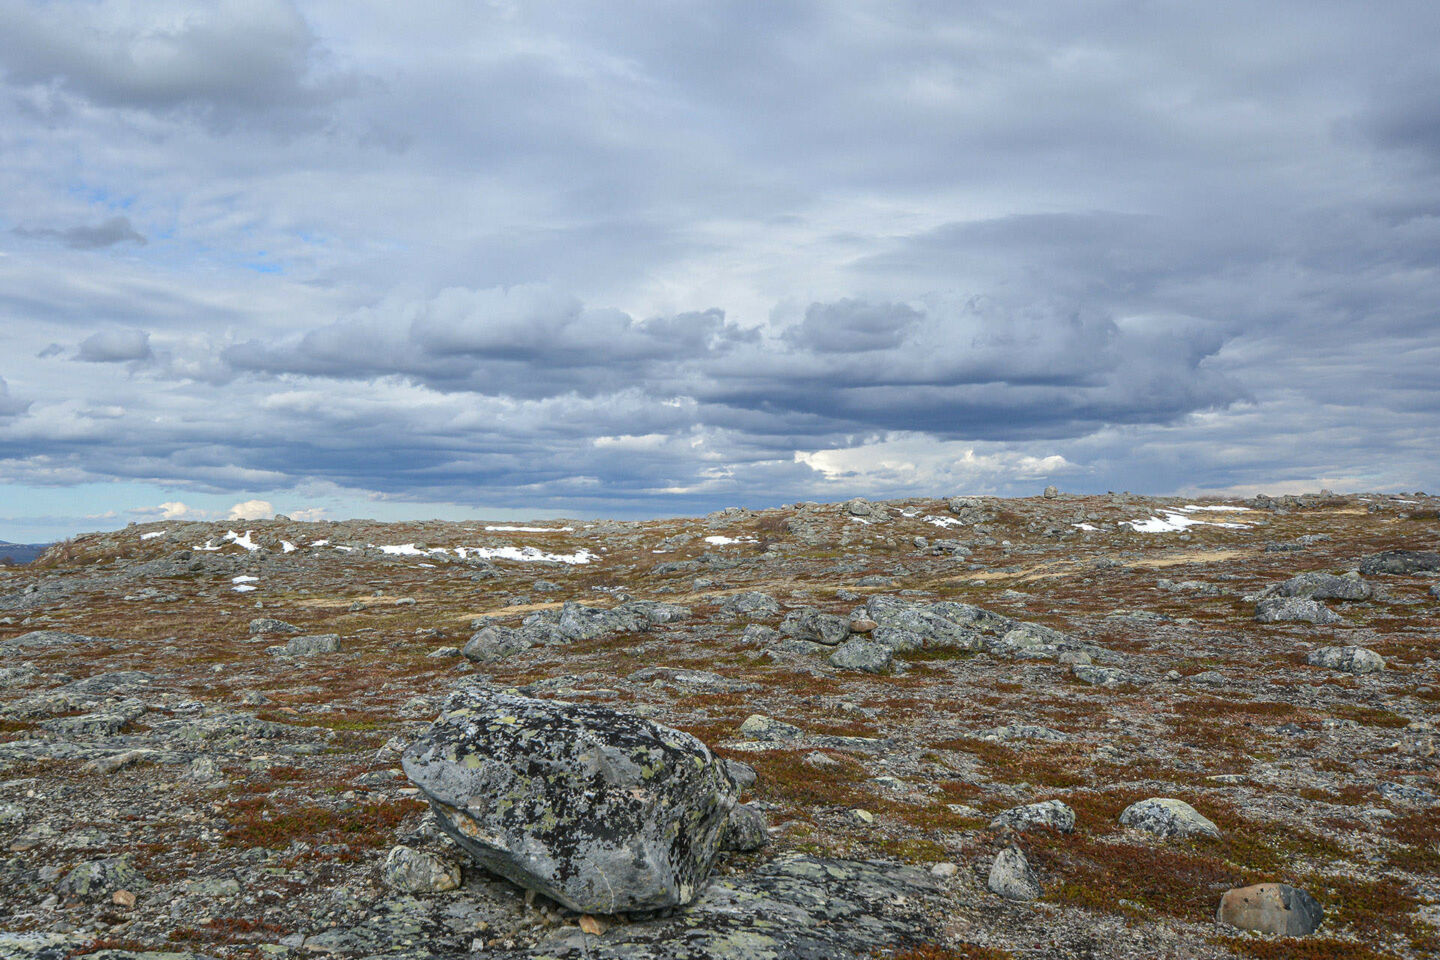 A stony way forward on the fellfields of Utsjoki, a Finnish Lapland filming location